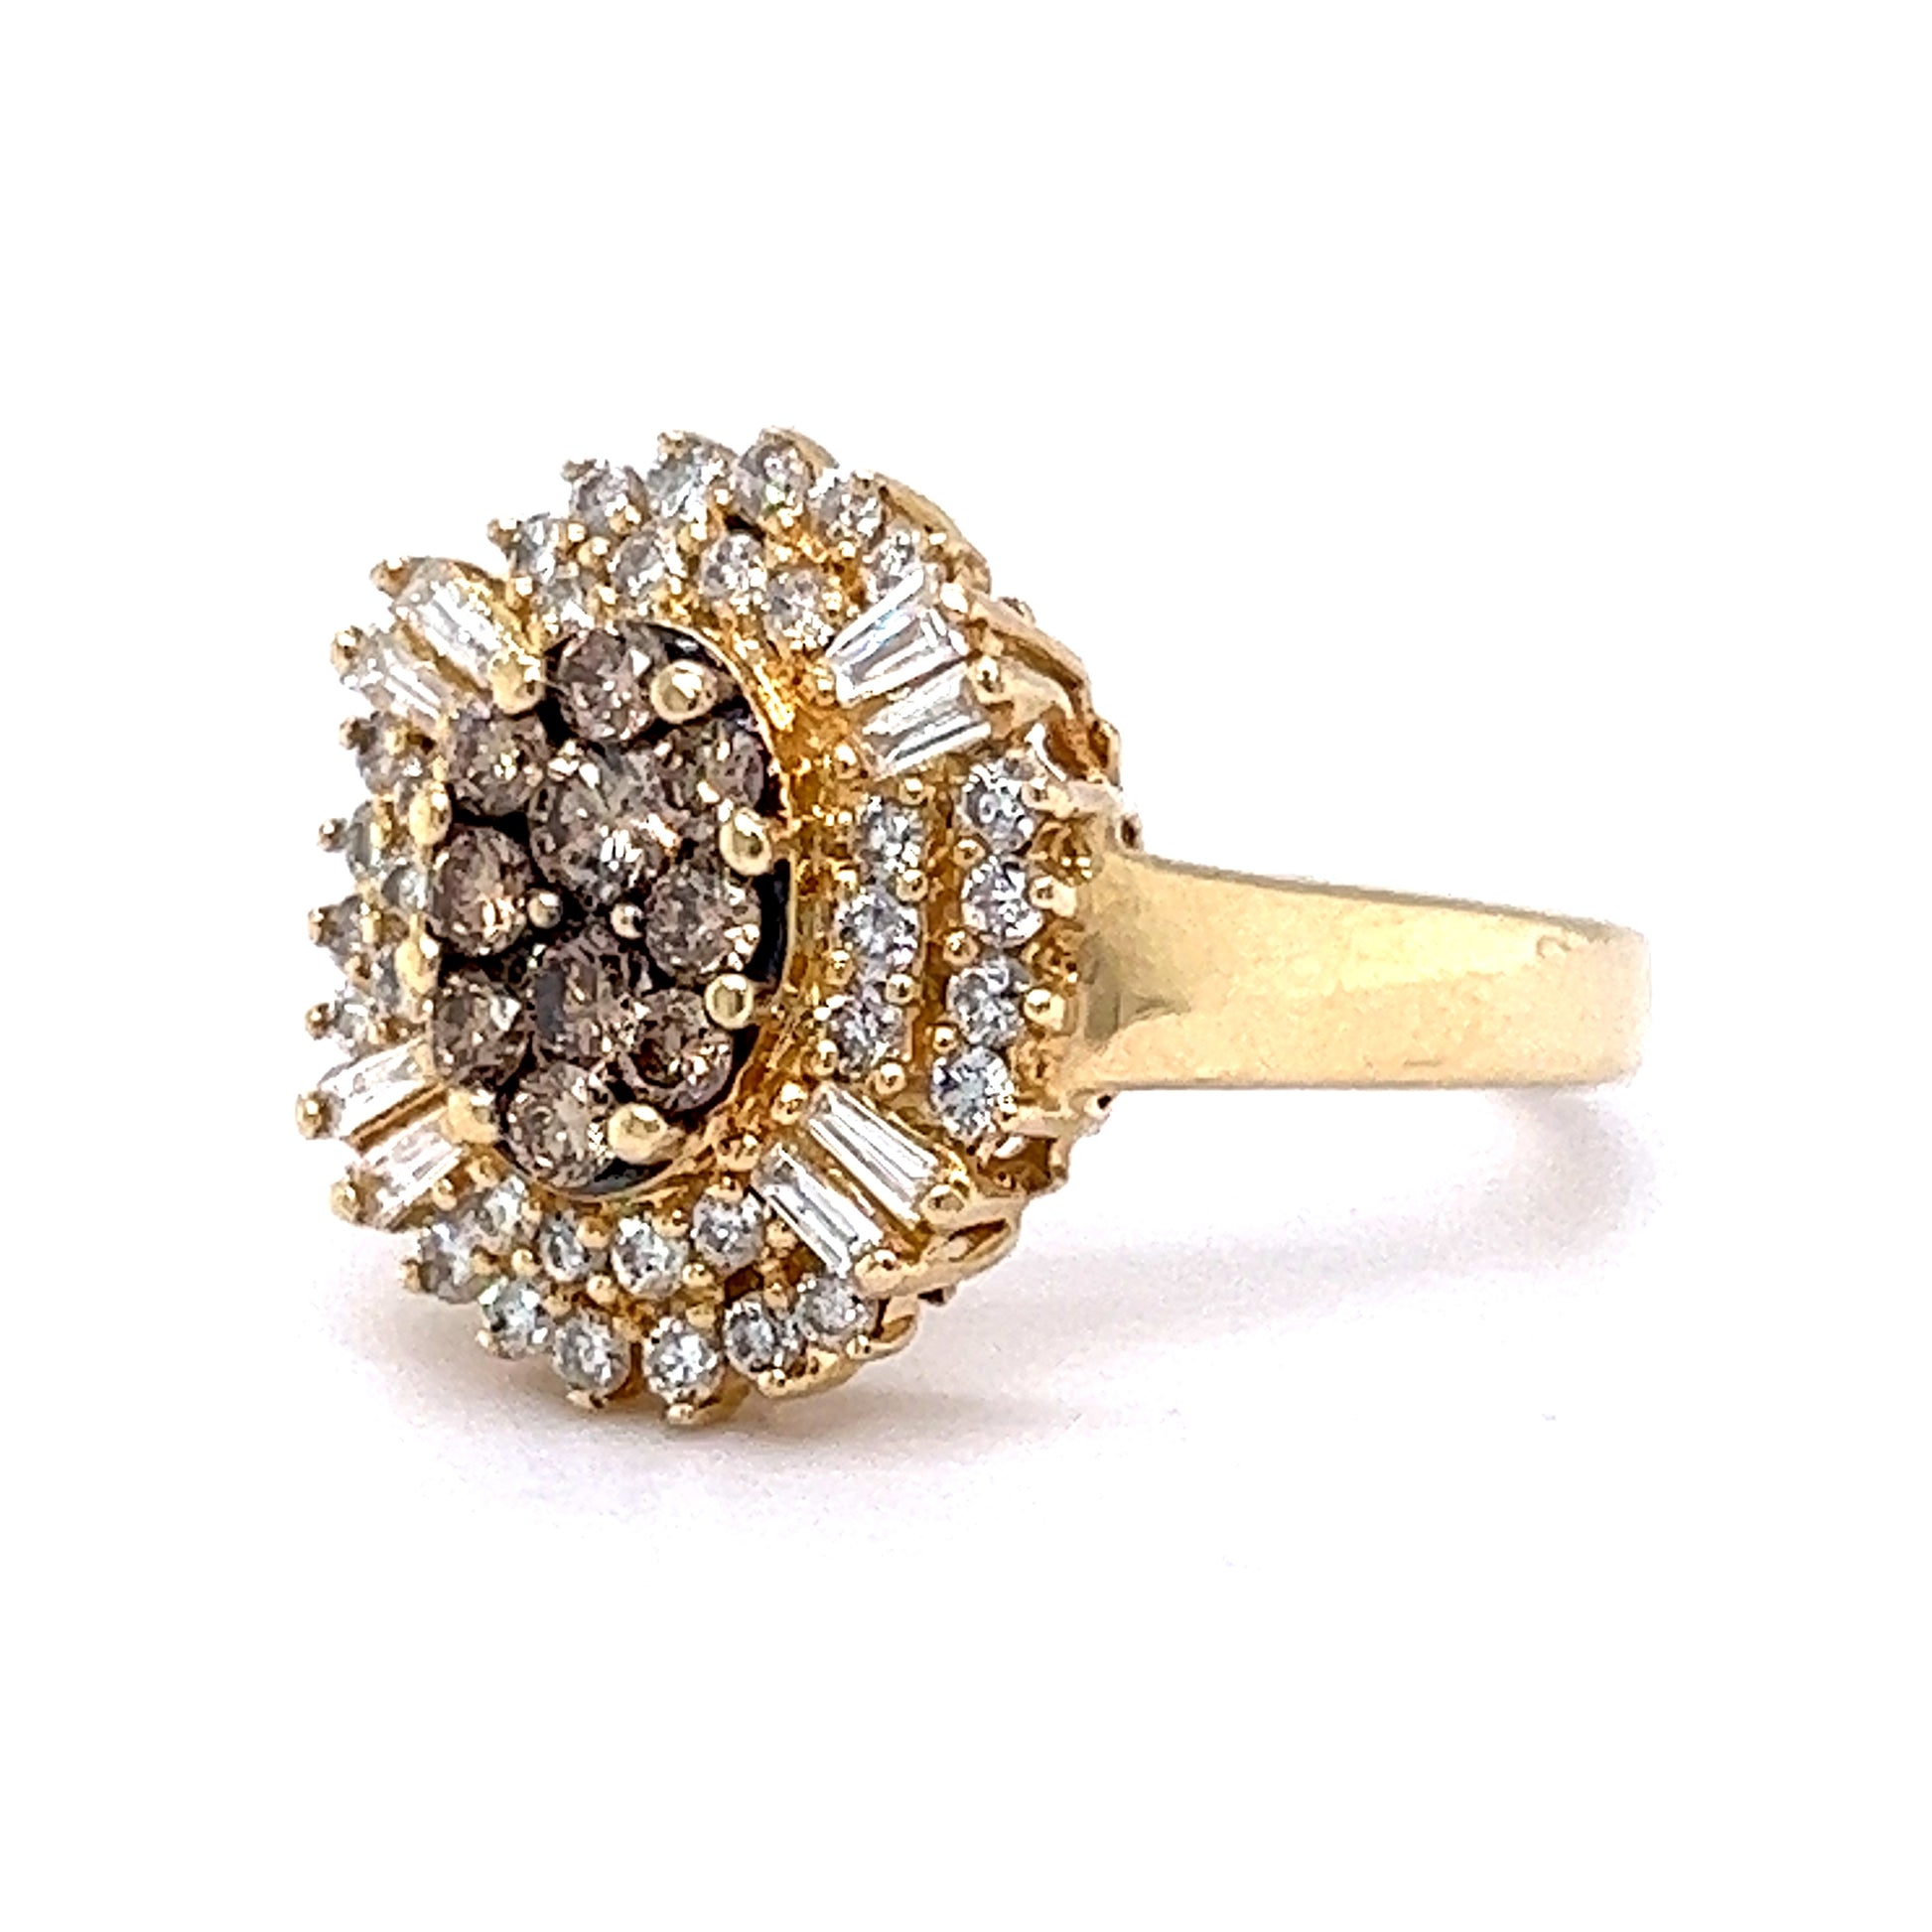 Effy Diamond Ballerina Ring in 14k Yellow GoldComposition: 14 Karat Yellow Gold Ring Size: 6.5 Total Diamond Weight: 1.36ct Total Gram Weight: 4.9 g Inscription: EFFY
      